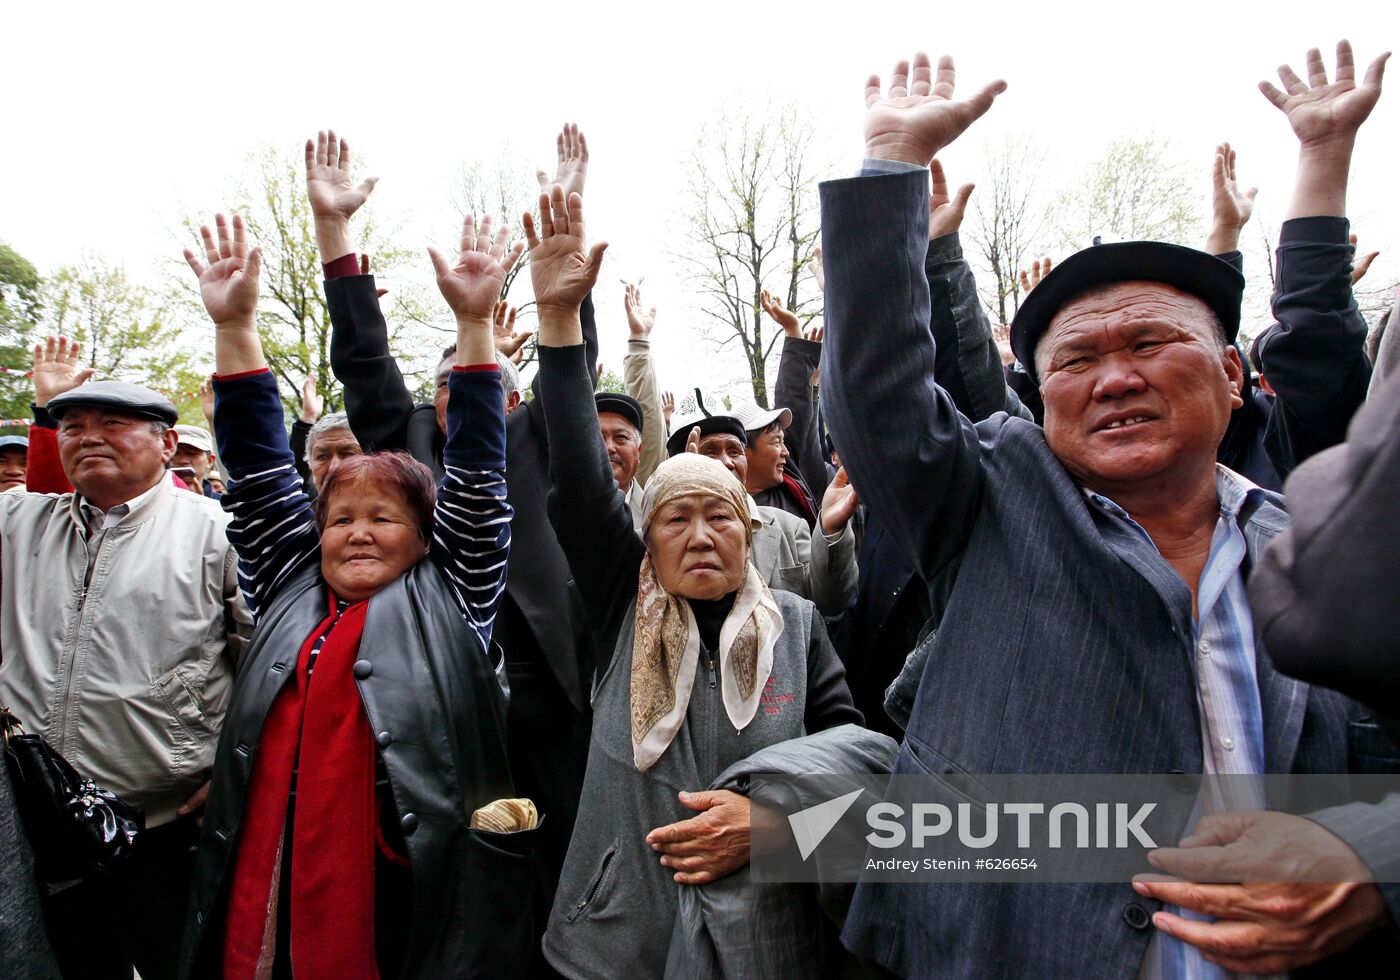 Kyrgyz President Kurmanbek Bakiyev supporters stage rally